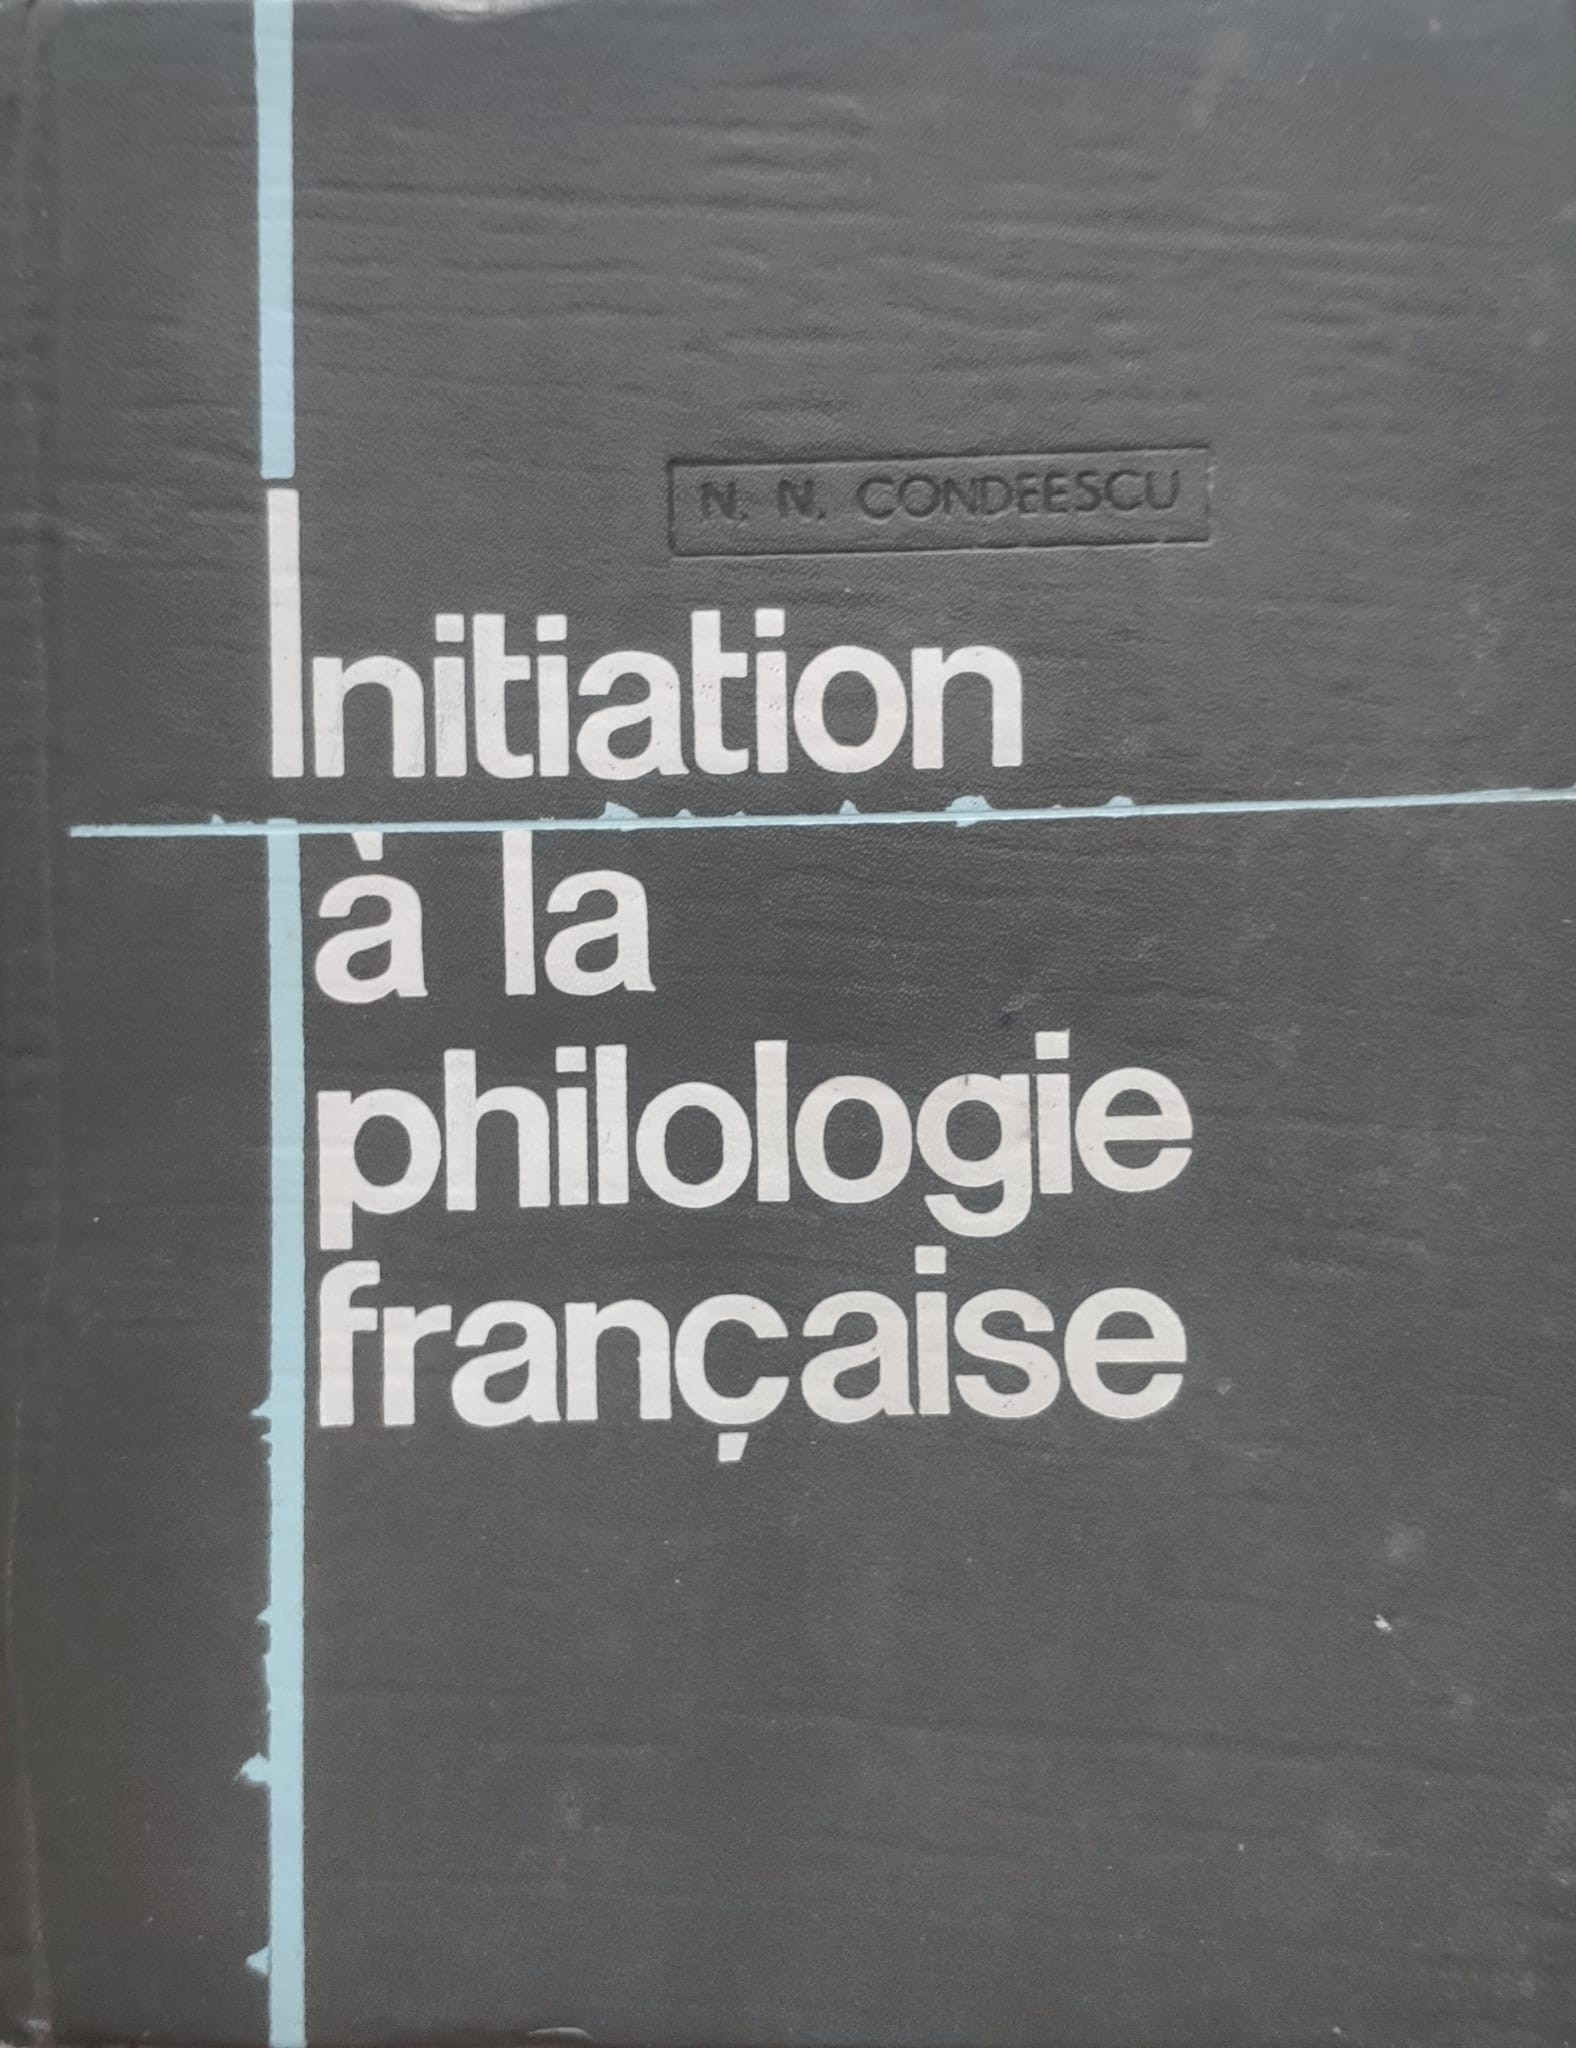 initiation a la philologie francaise                                                                 n.n.condeescu                                                                                       